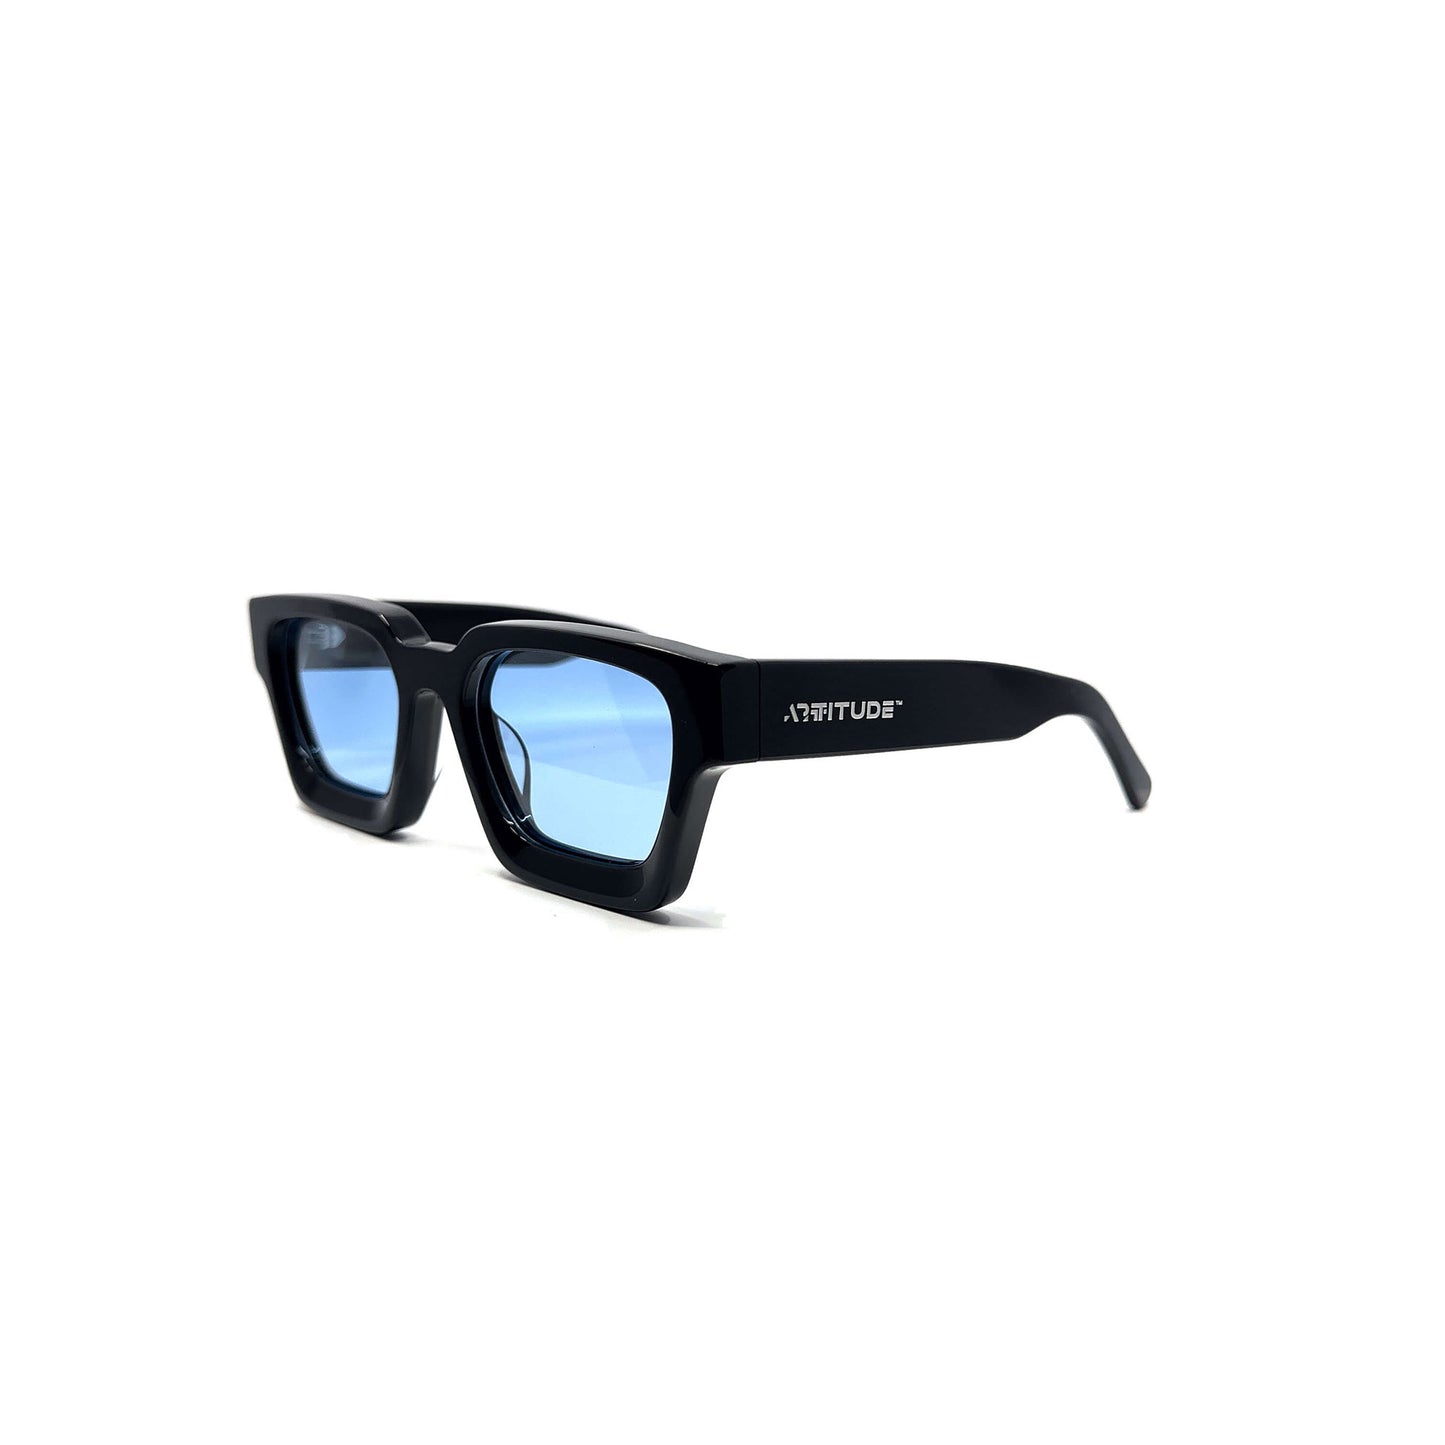 Neon Blu Street Fashion sunglasses